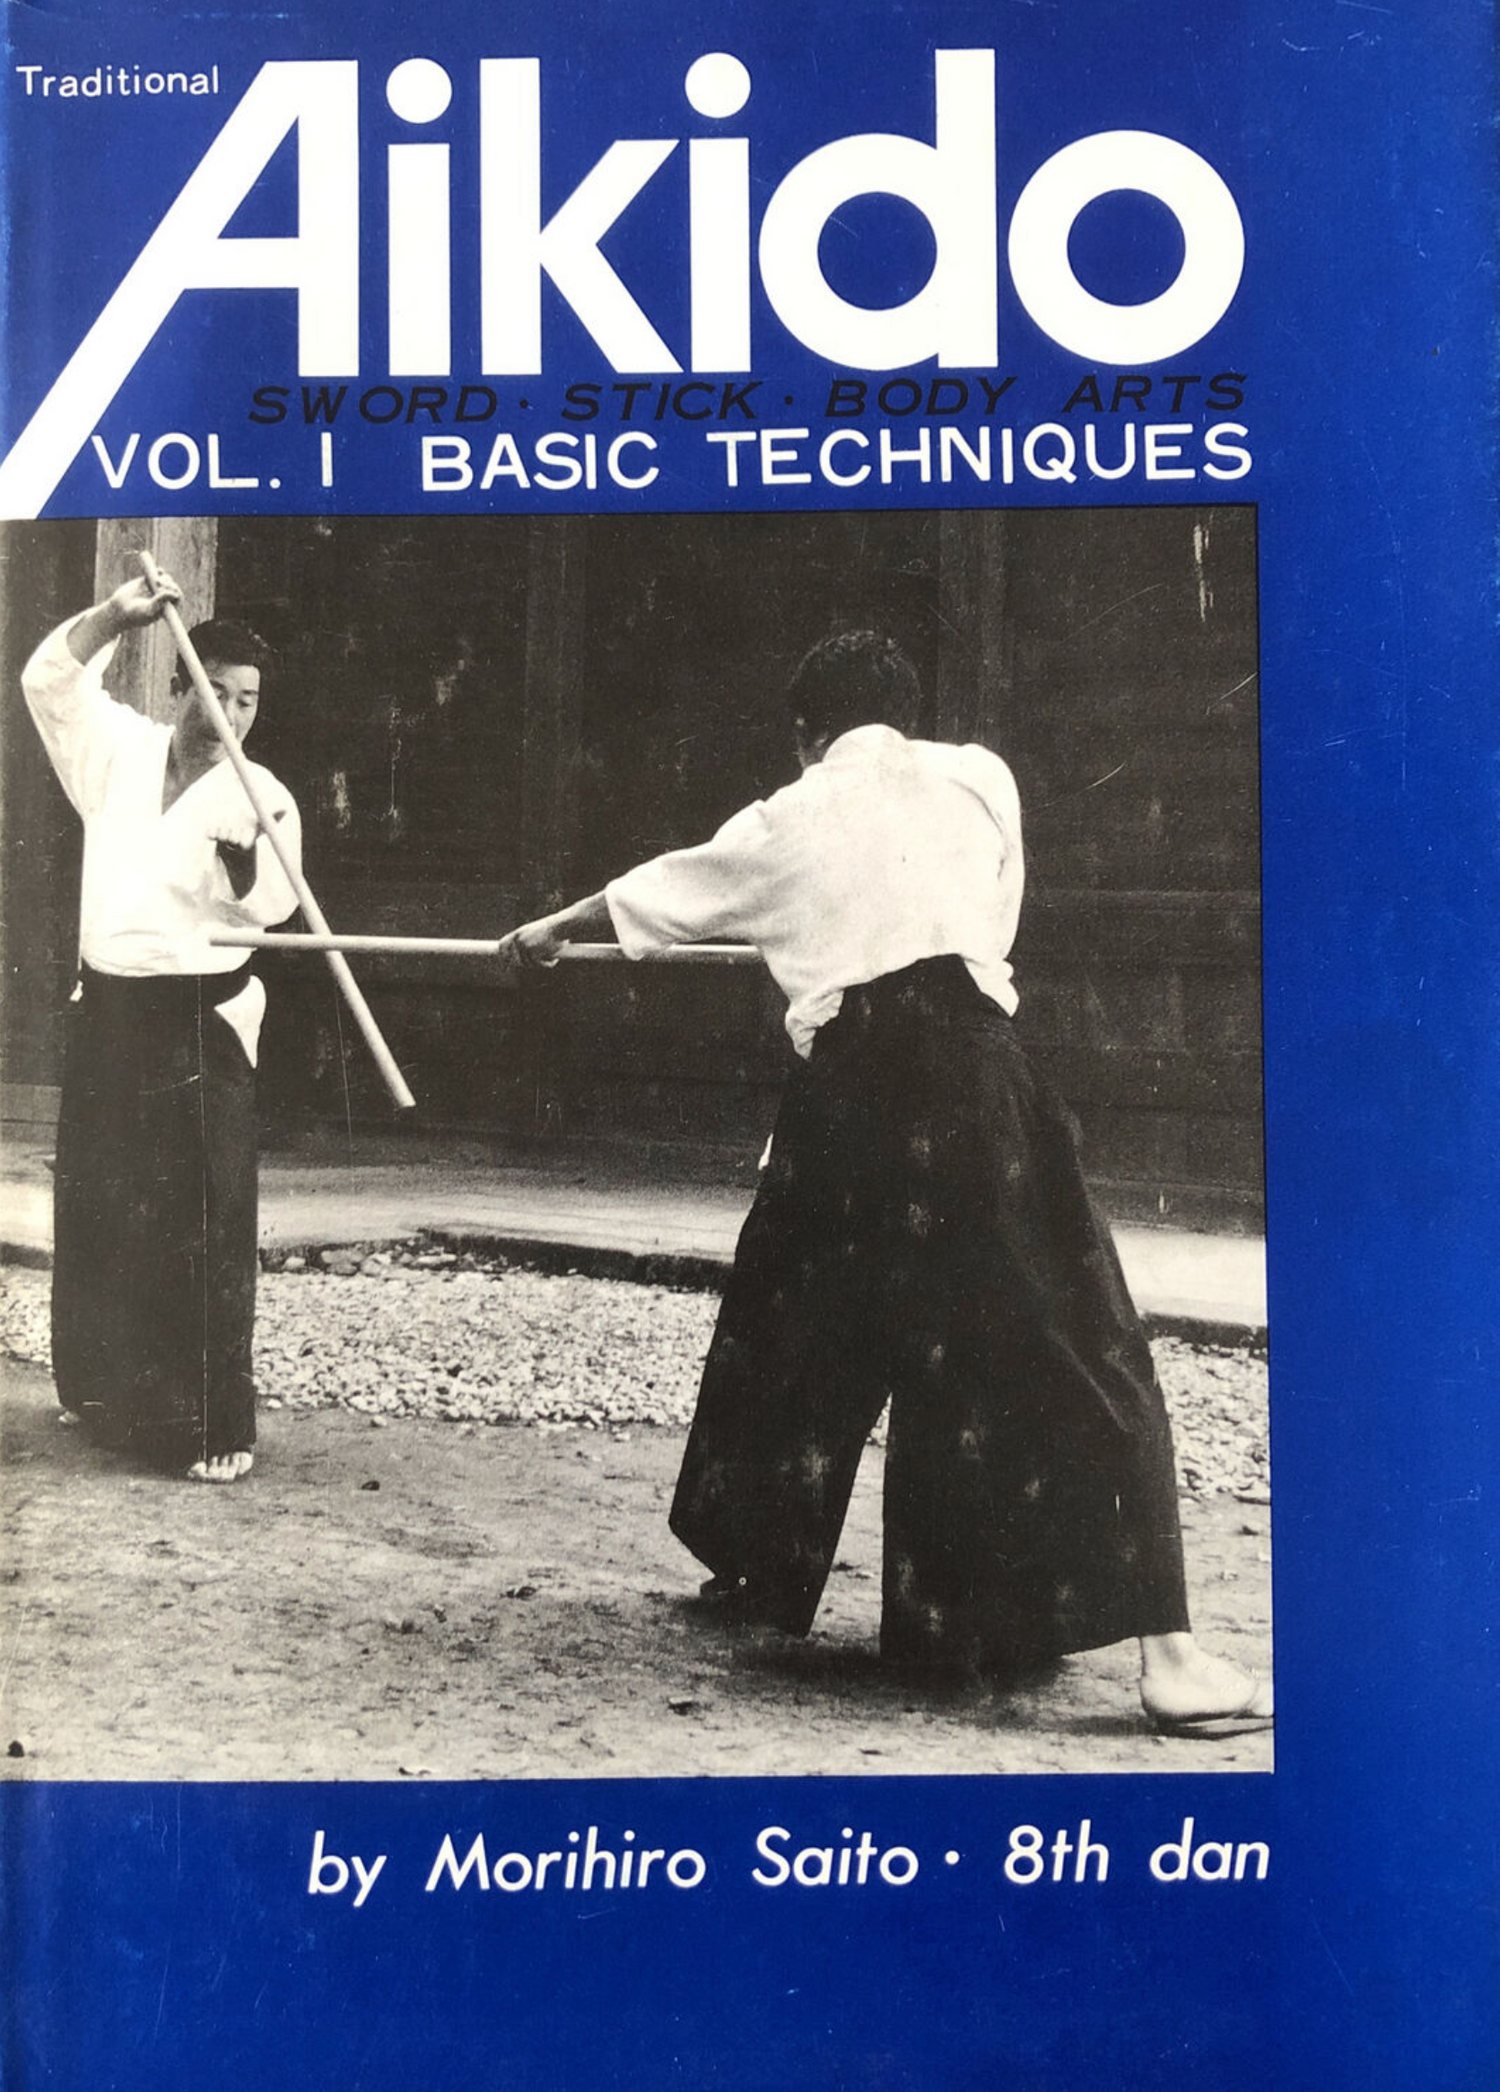 Traditional Aikido Vol 1: Basic Techniques Book by Morihiro Saito (Preowned) - Budovideos Inc